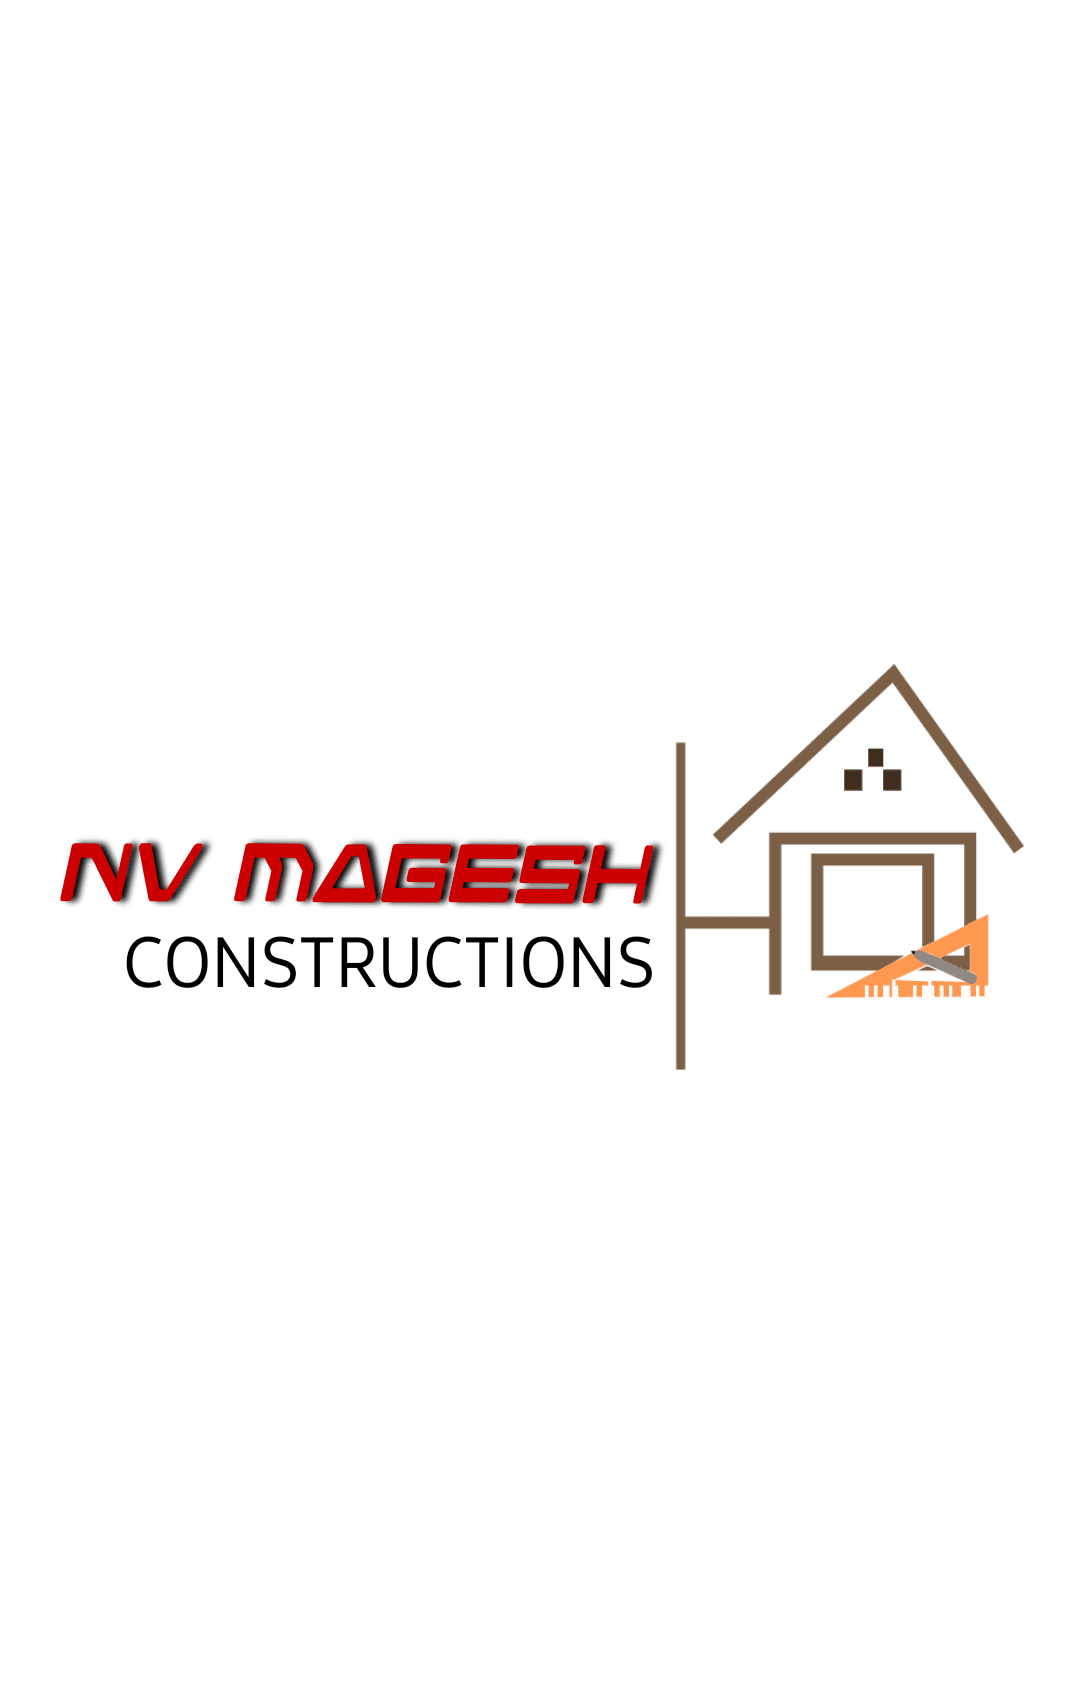 NV MAGESH CONSTRUCTIONS